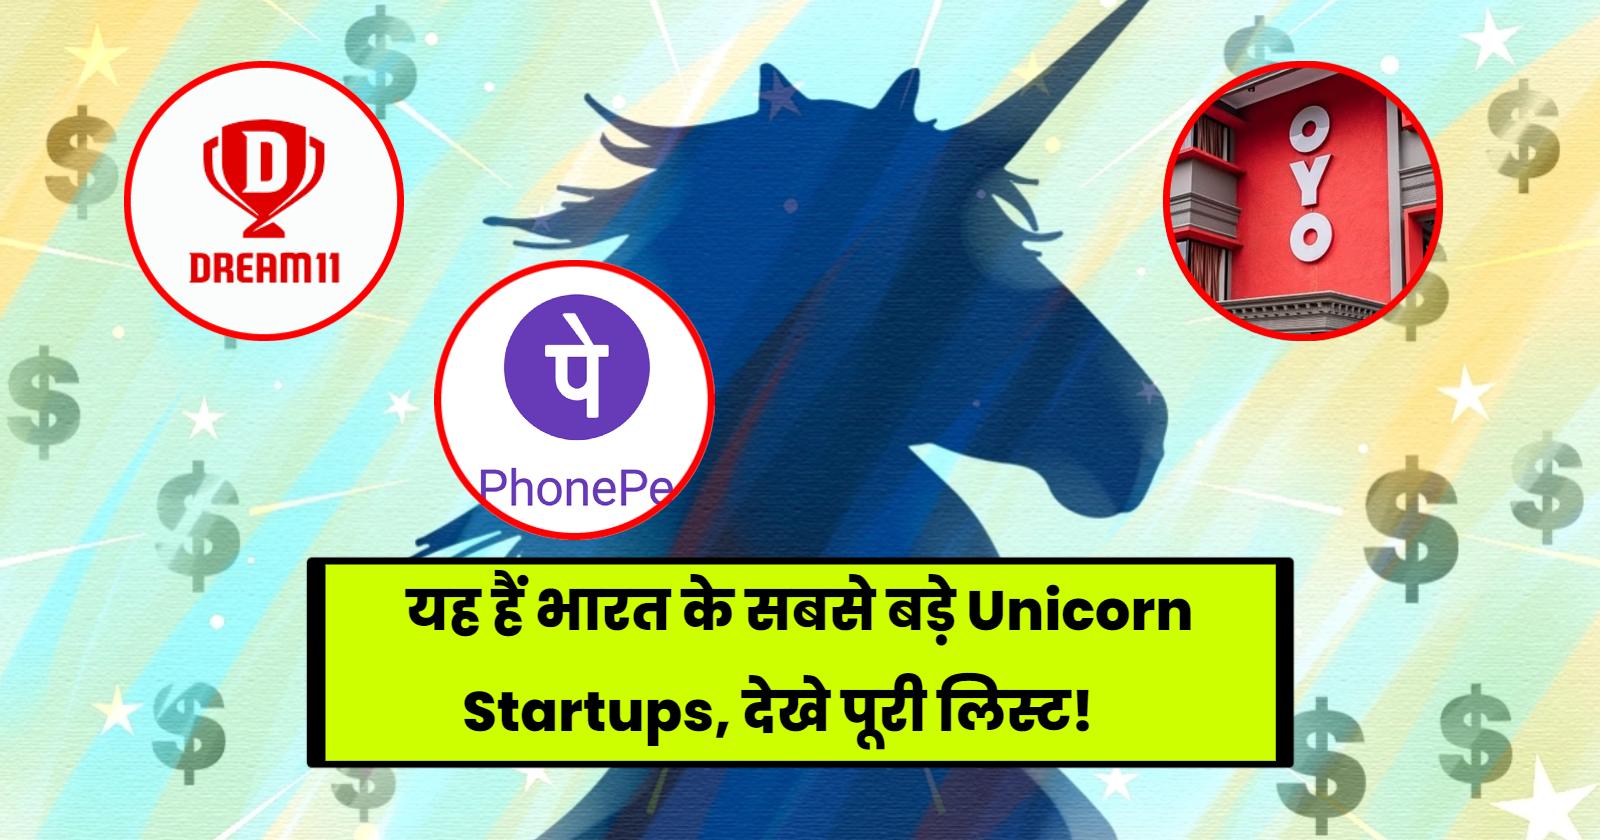 10 Top Unicorn Startups of India